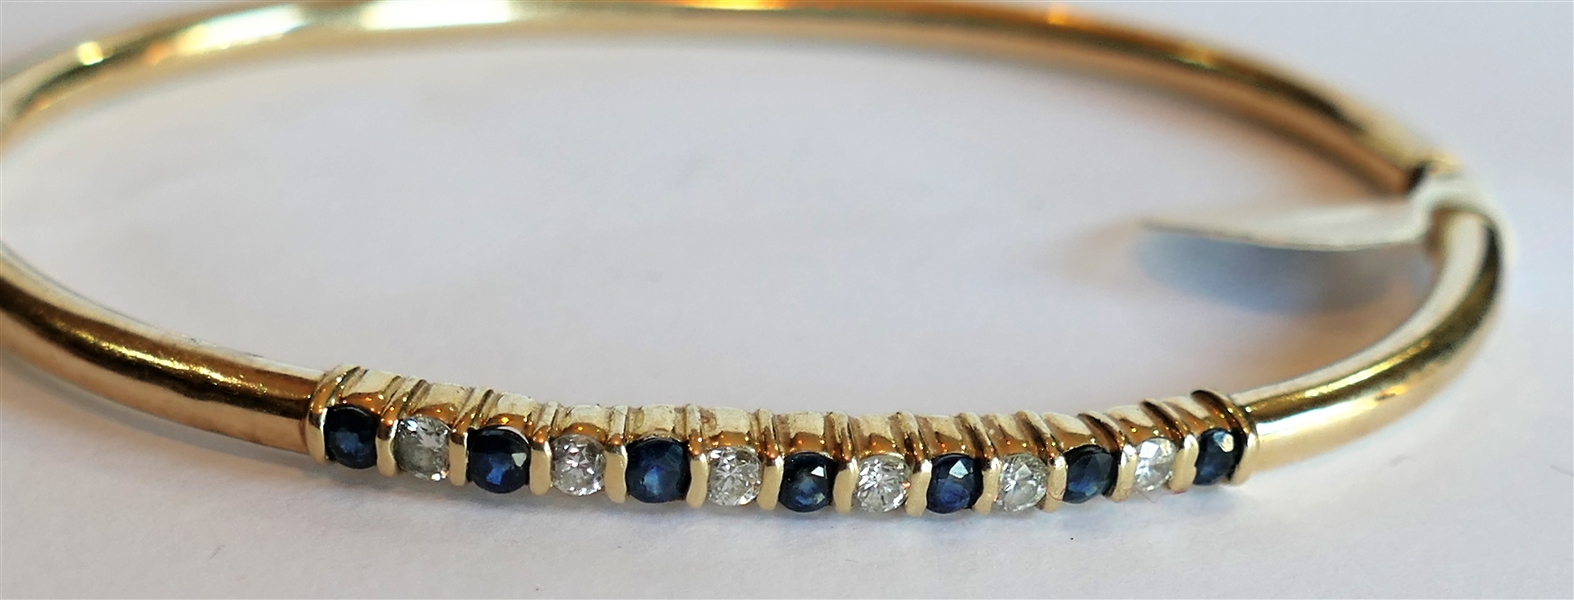 14kt Yellow Gold Diamond and Sapphire Bangle Bracelet 